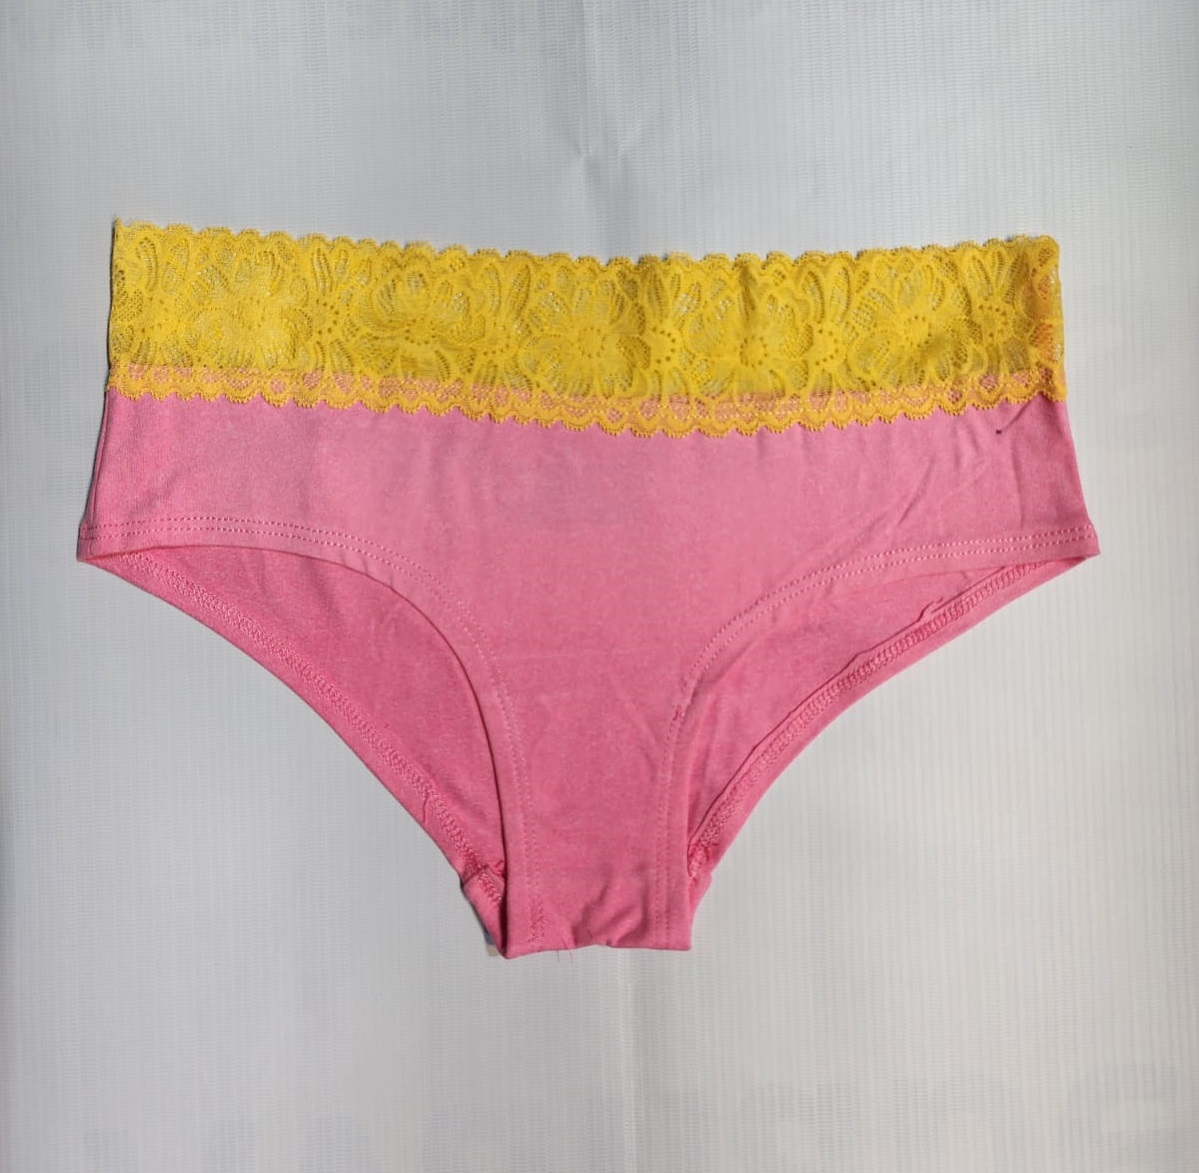 Victoria Secret Stylish Panty Set for womens - 7 Piece